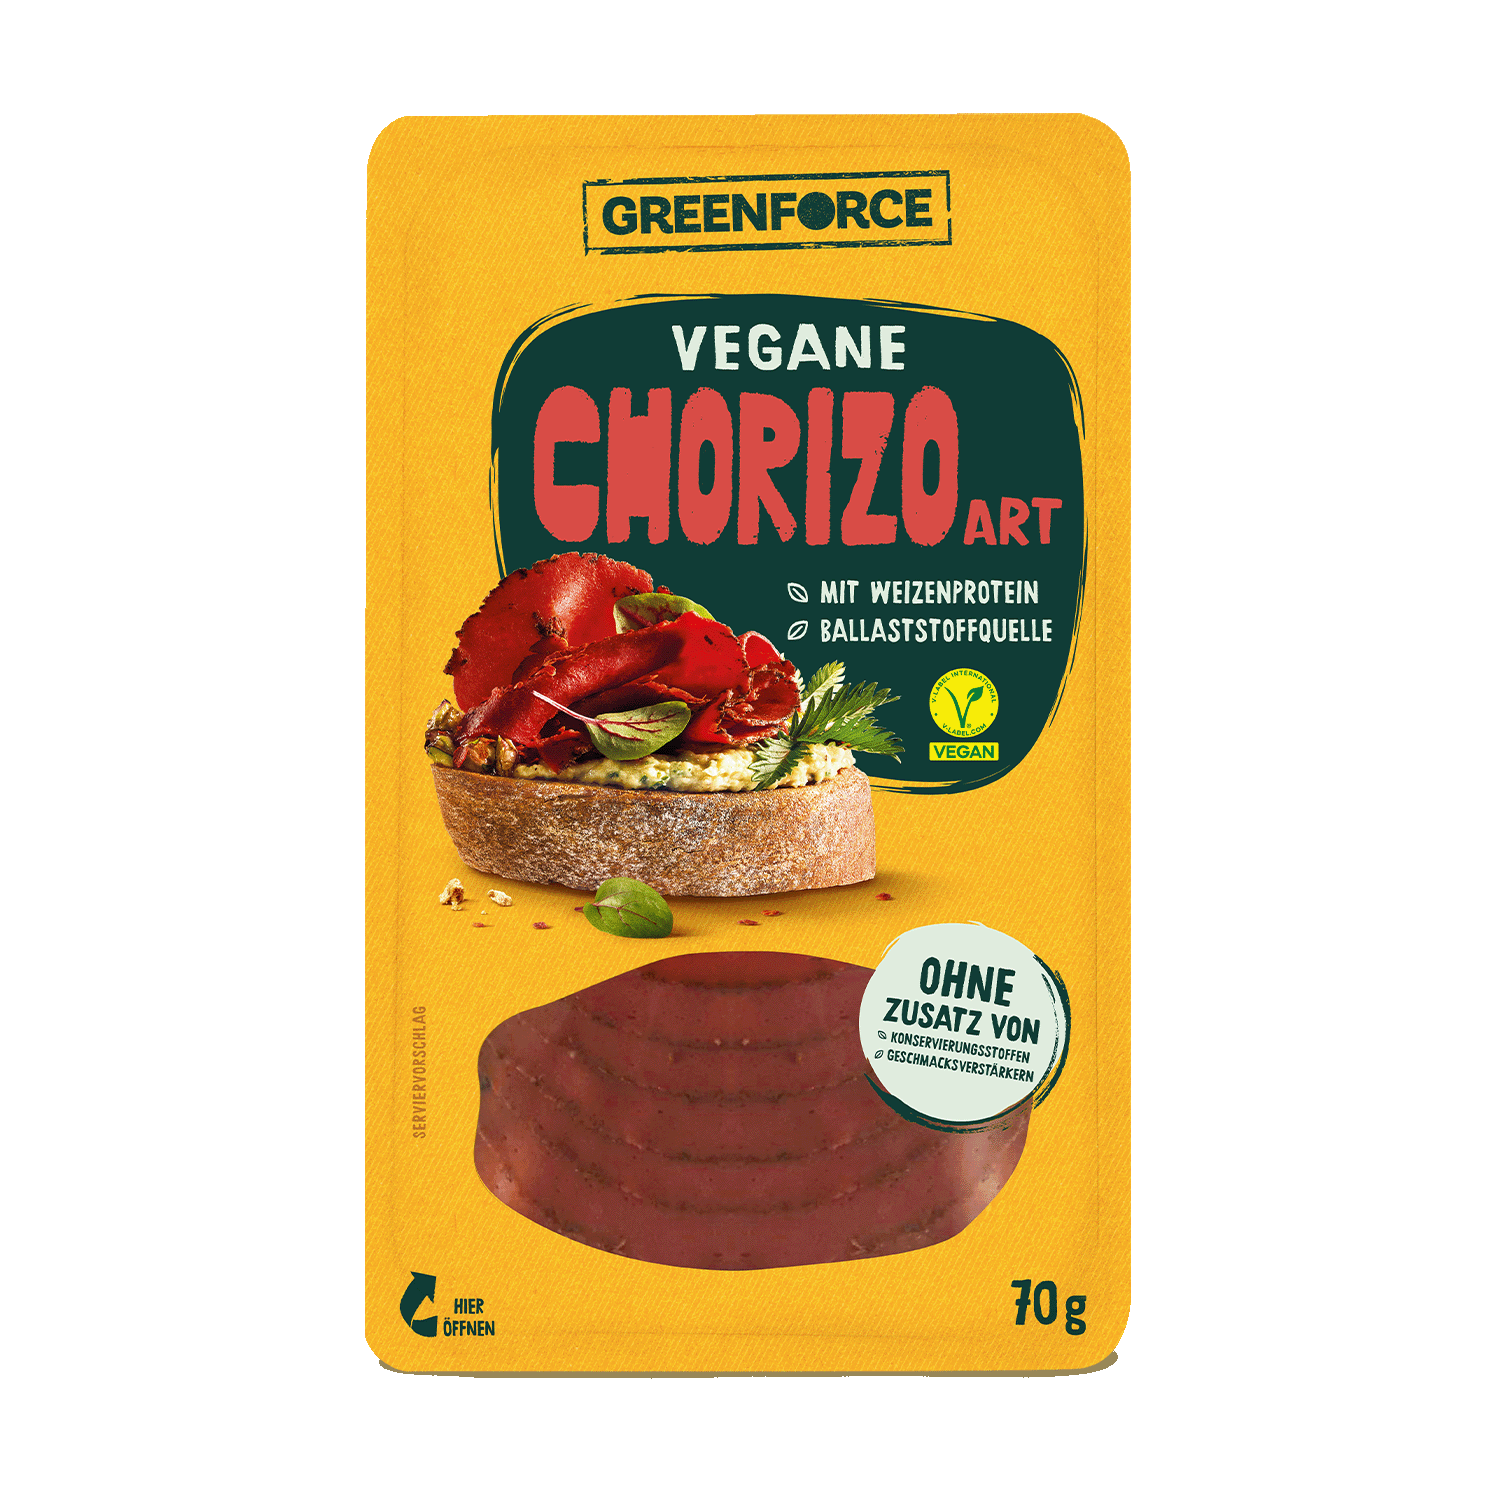 Veganer Aufschnitt Chorizo Art, 70g